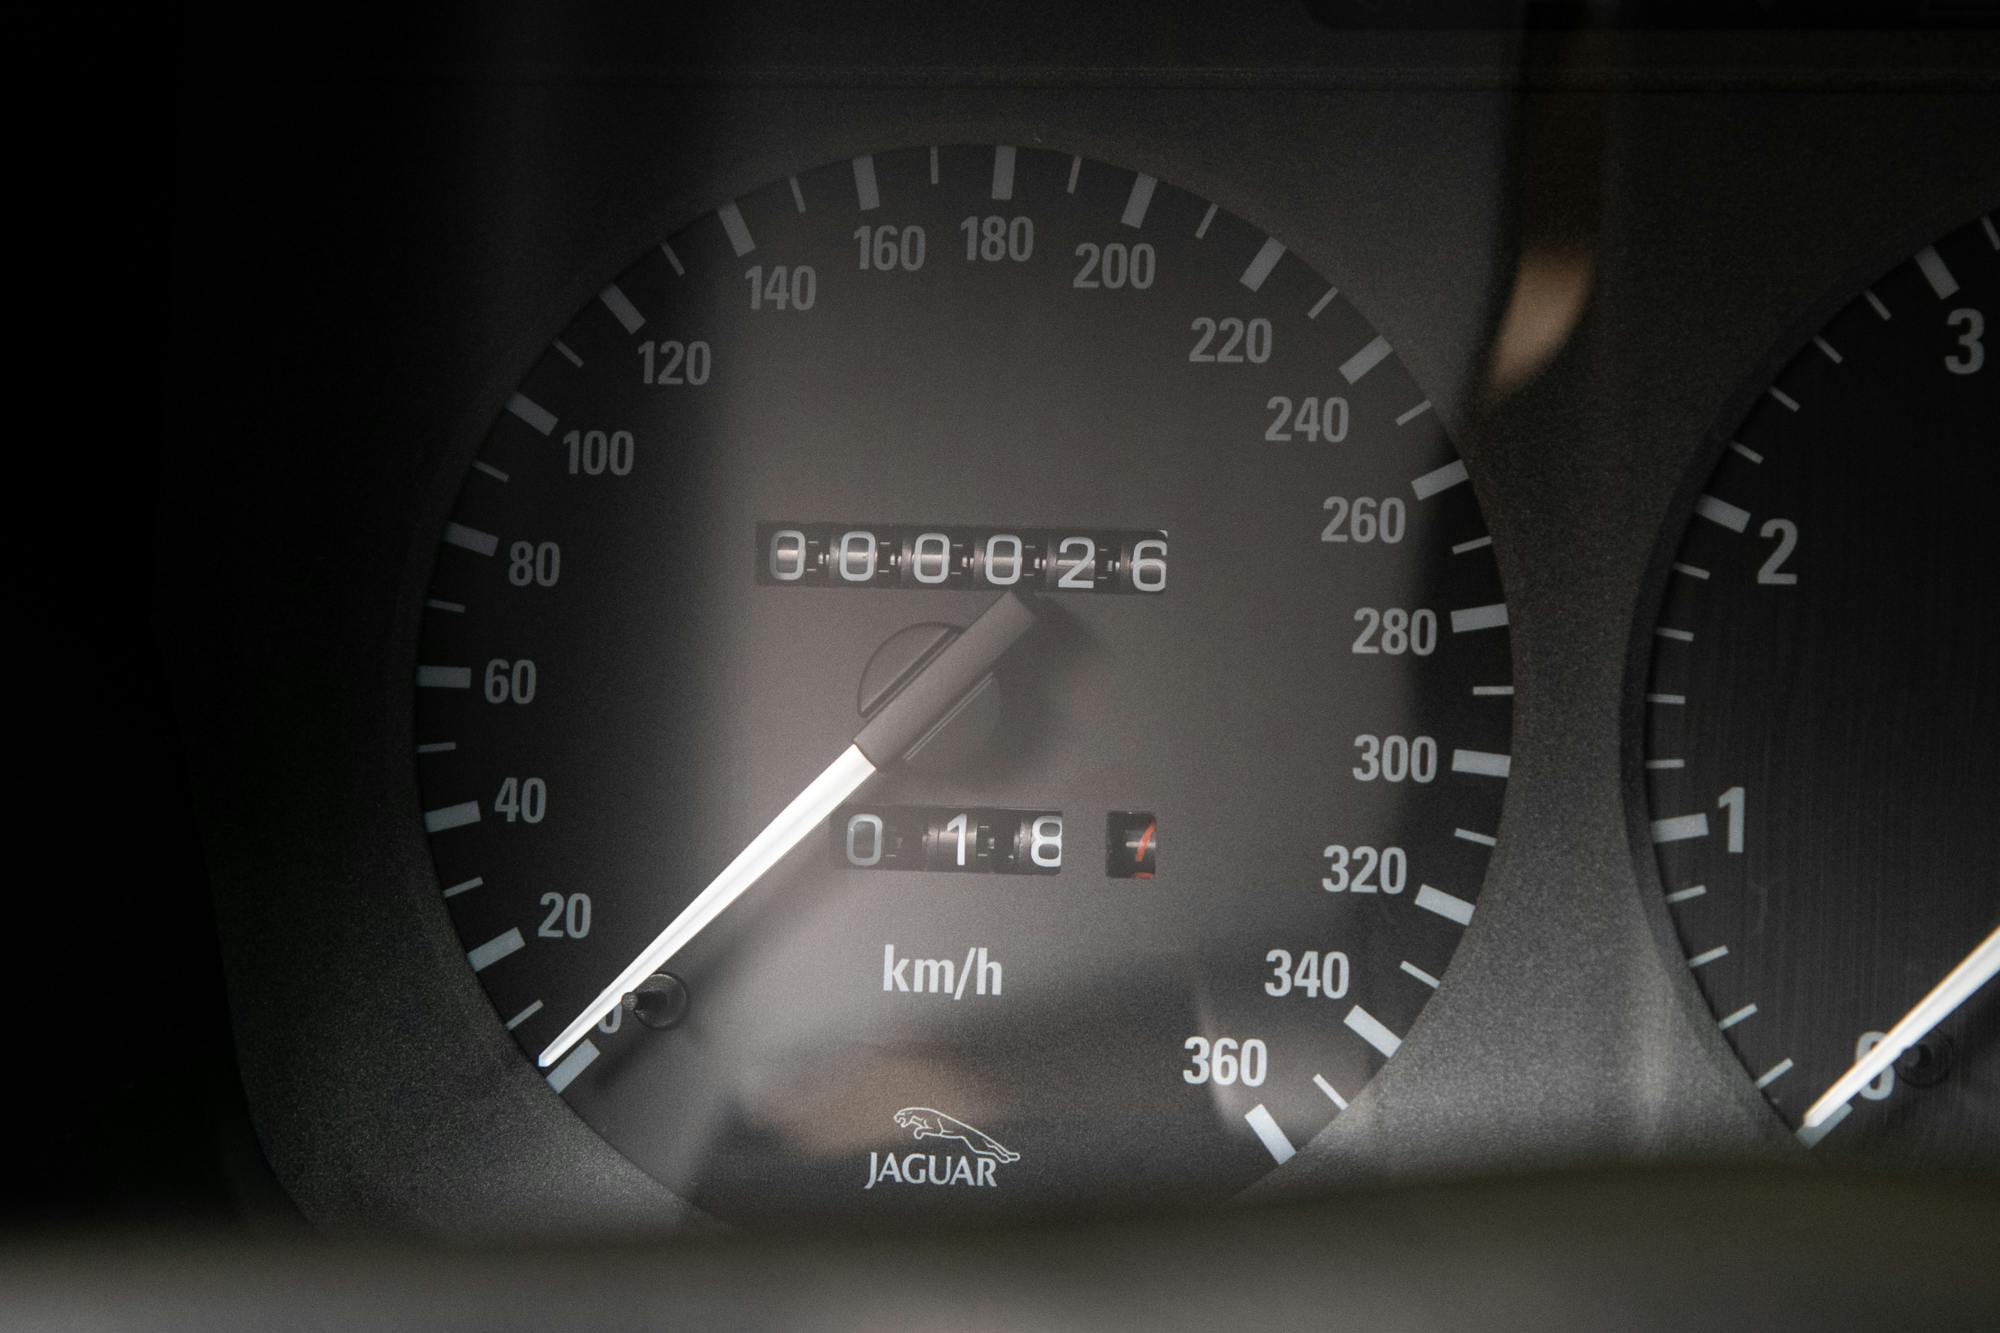 Jaguar XJ220 speedometer odometer